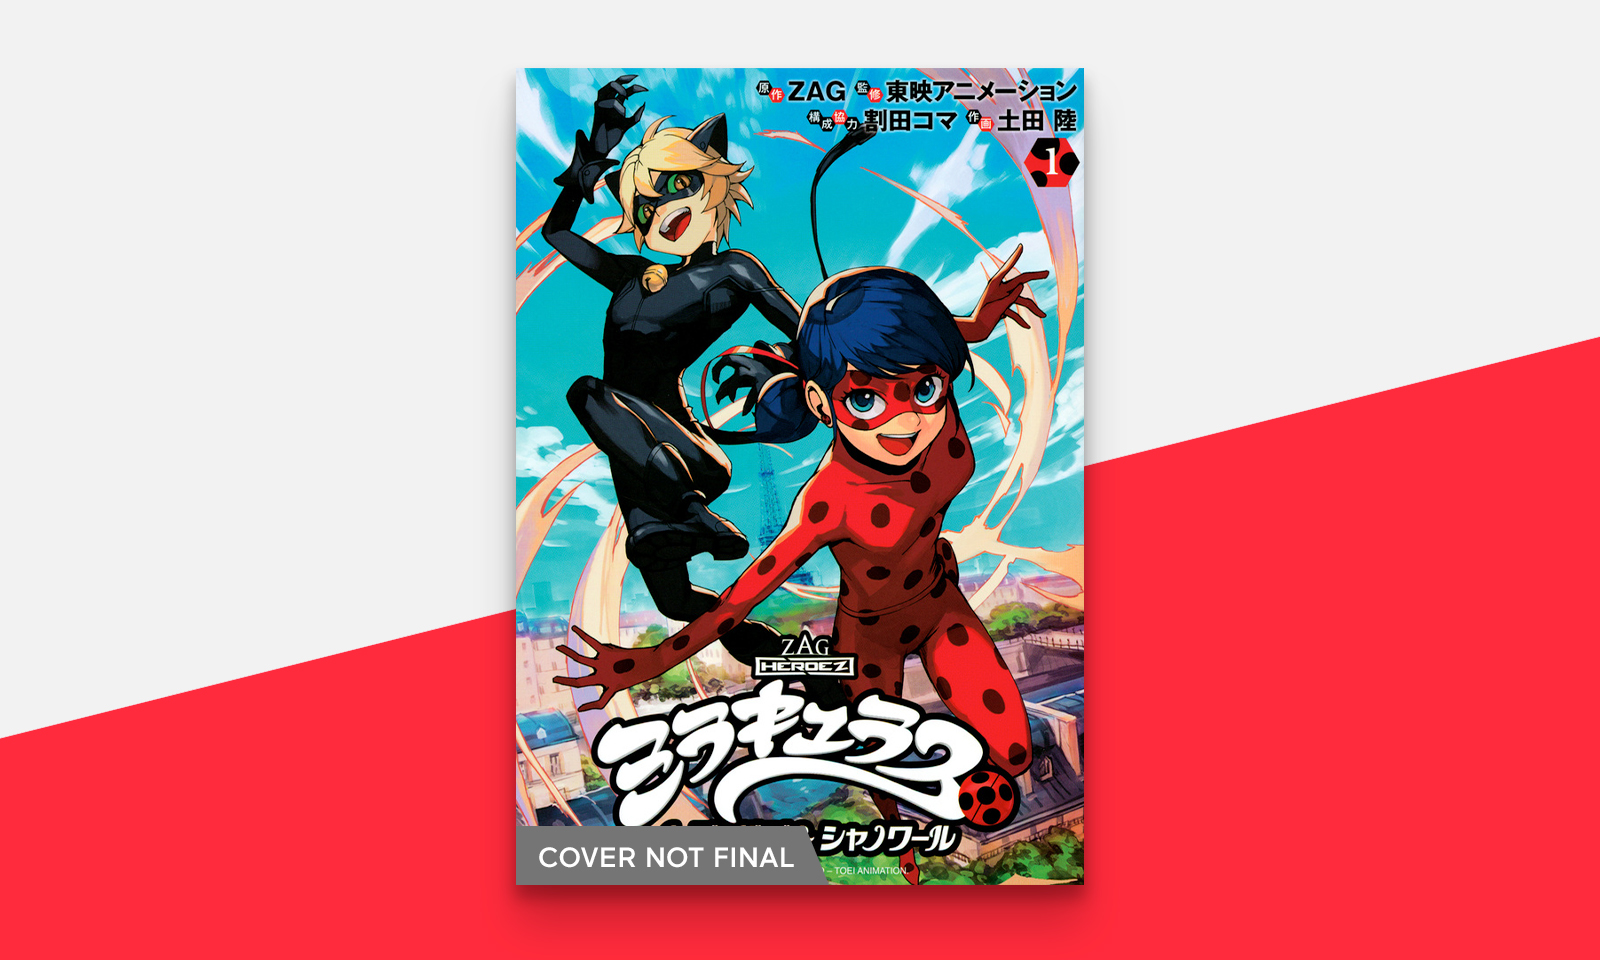 Anime Nyc Announcements From Kodansha Include Miraculous Manga